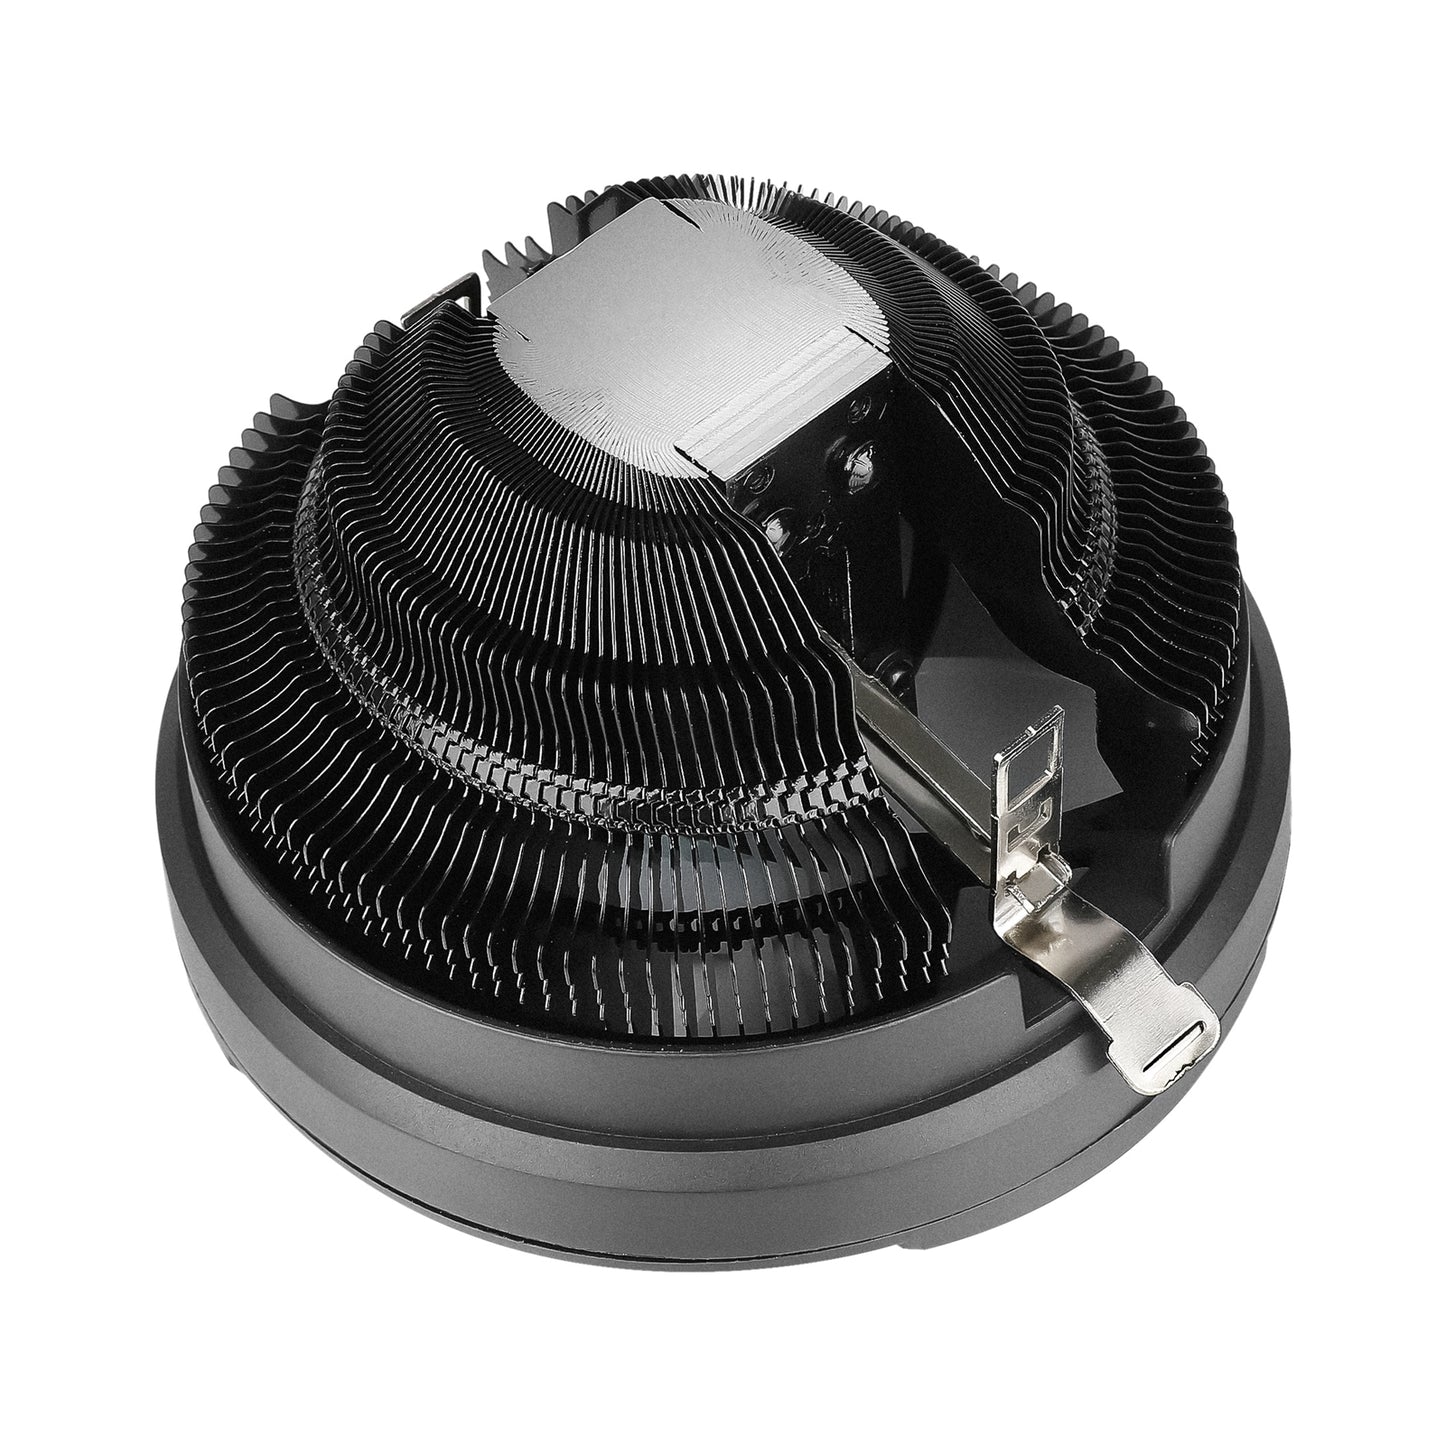 ANTEC T120 Fan CPU Cooler, Universal Socket, 120mm Chromatic Silent RGB Fan